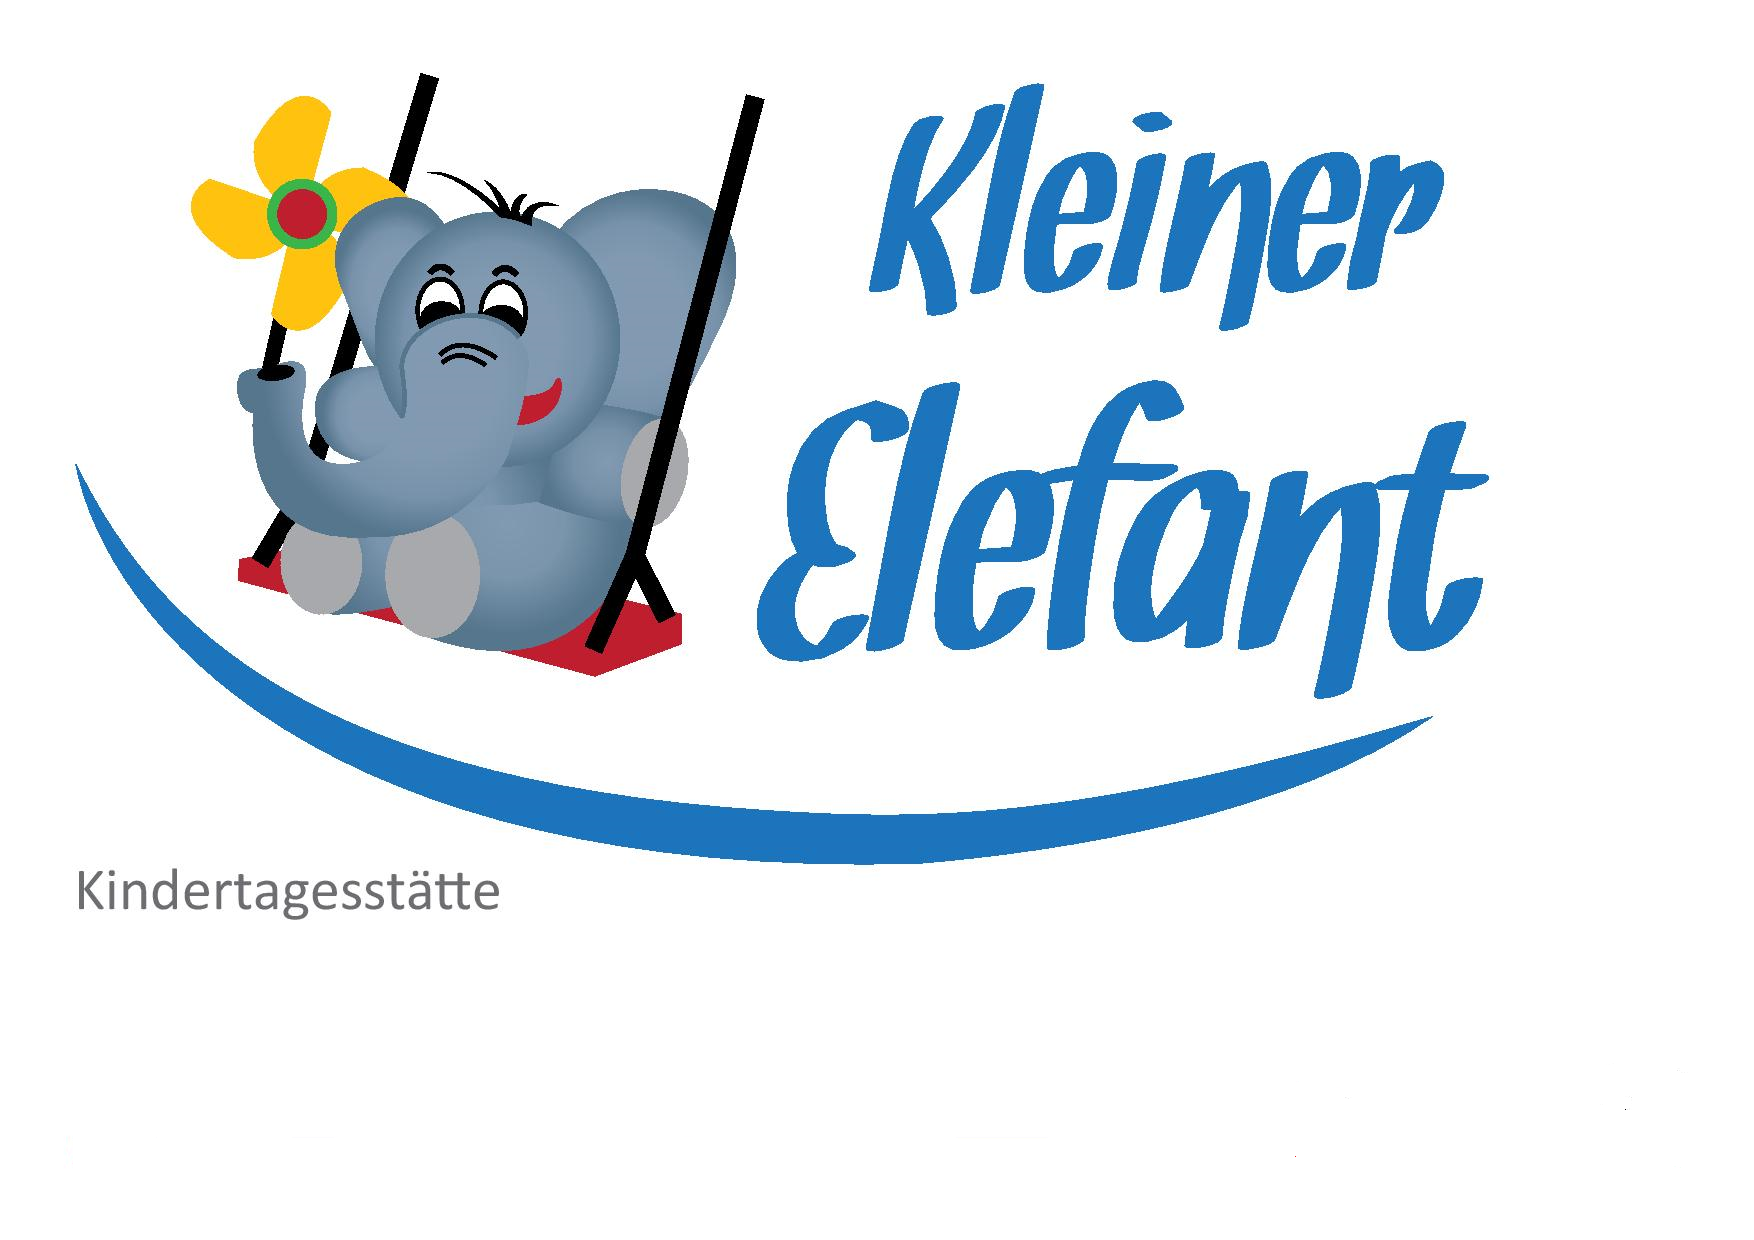 KiTa "Kleiner Elefant
Oststr. 82-84, 40210 Düsseldorf